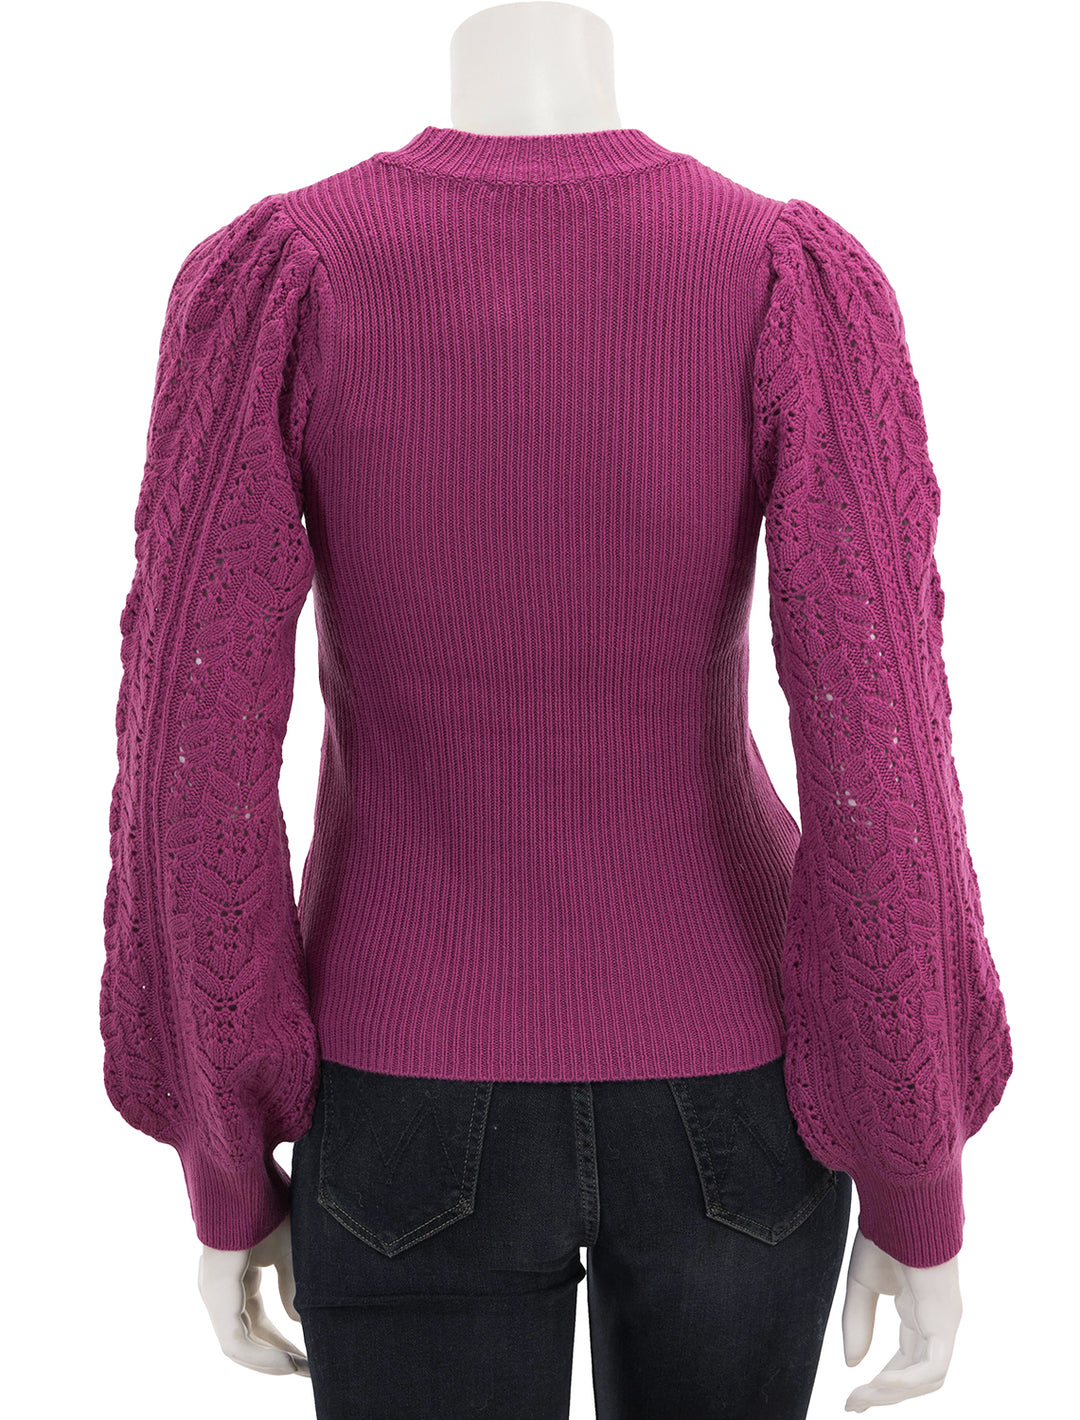 Back view of Splendid's phoebe pointelle sweater in magenta.